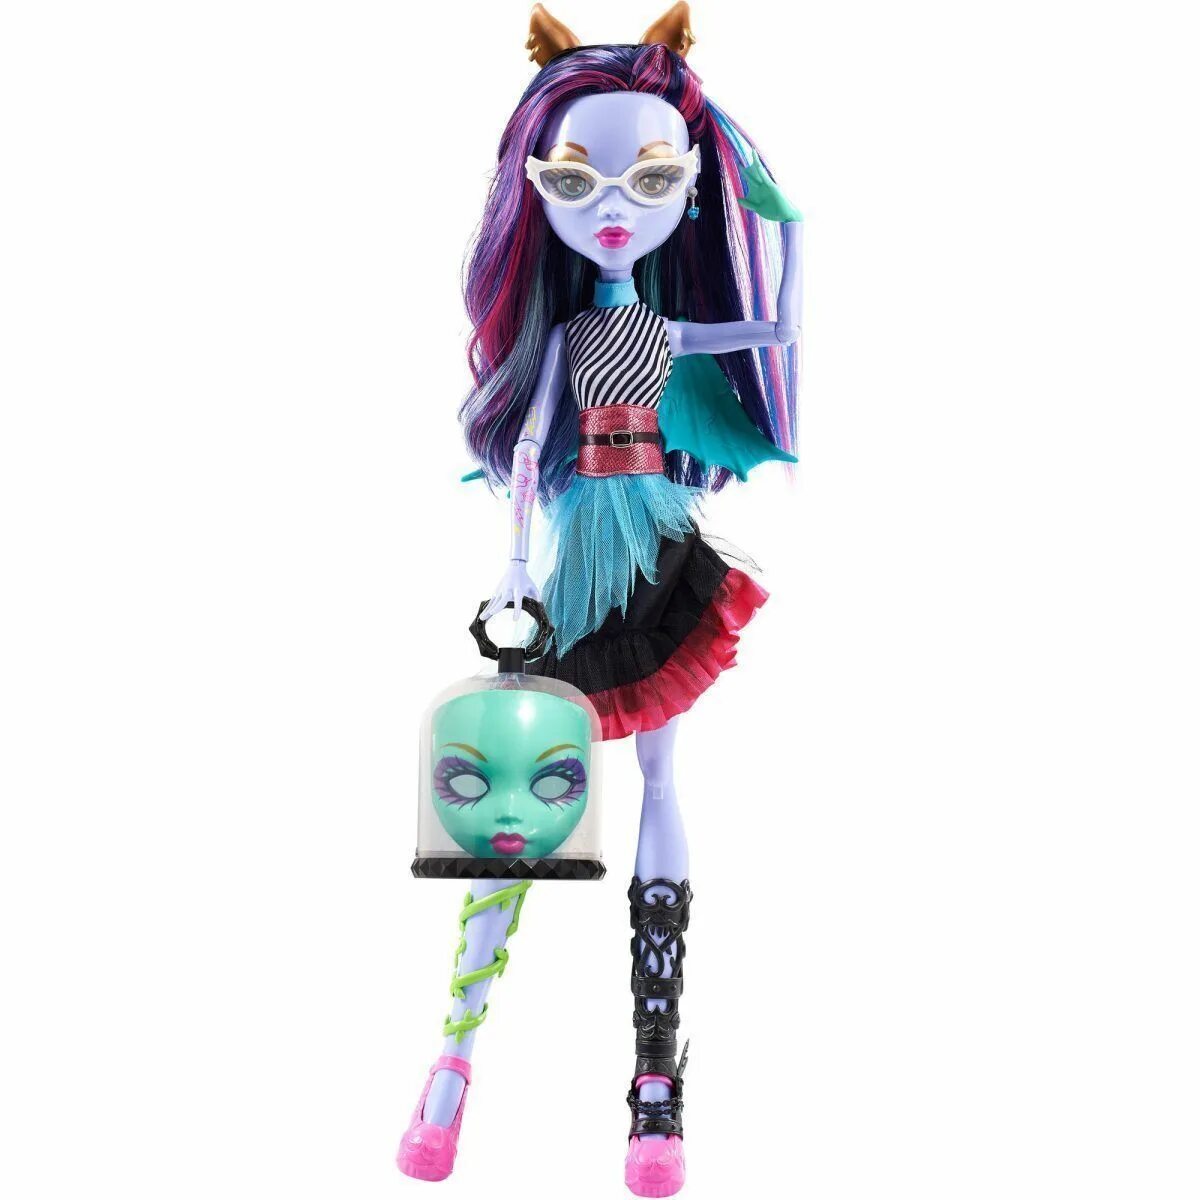 Хай высокий. Монстер Хай 70 см. Кукла Monster High 70 см. Monster High 70 см Freaky friend. Voltageous Монстер Хай кукла.